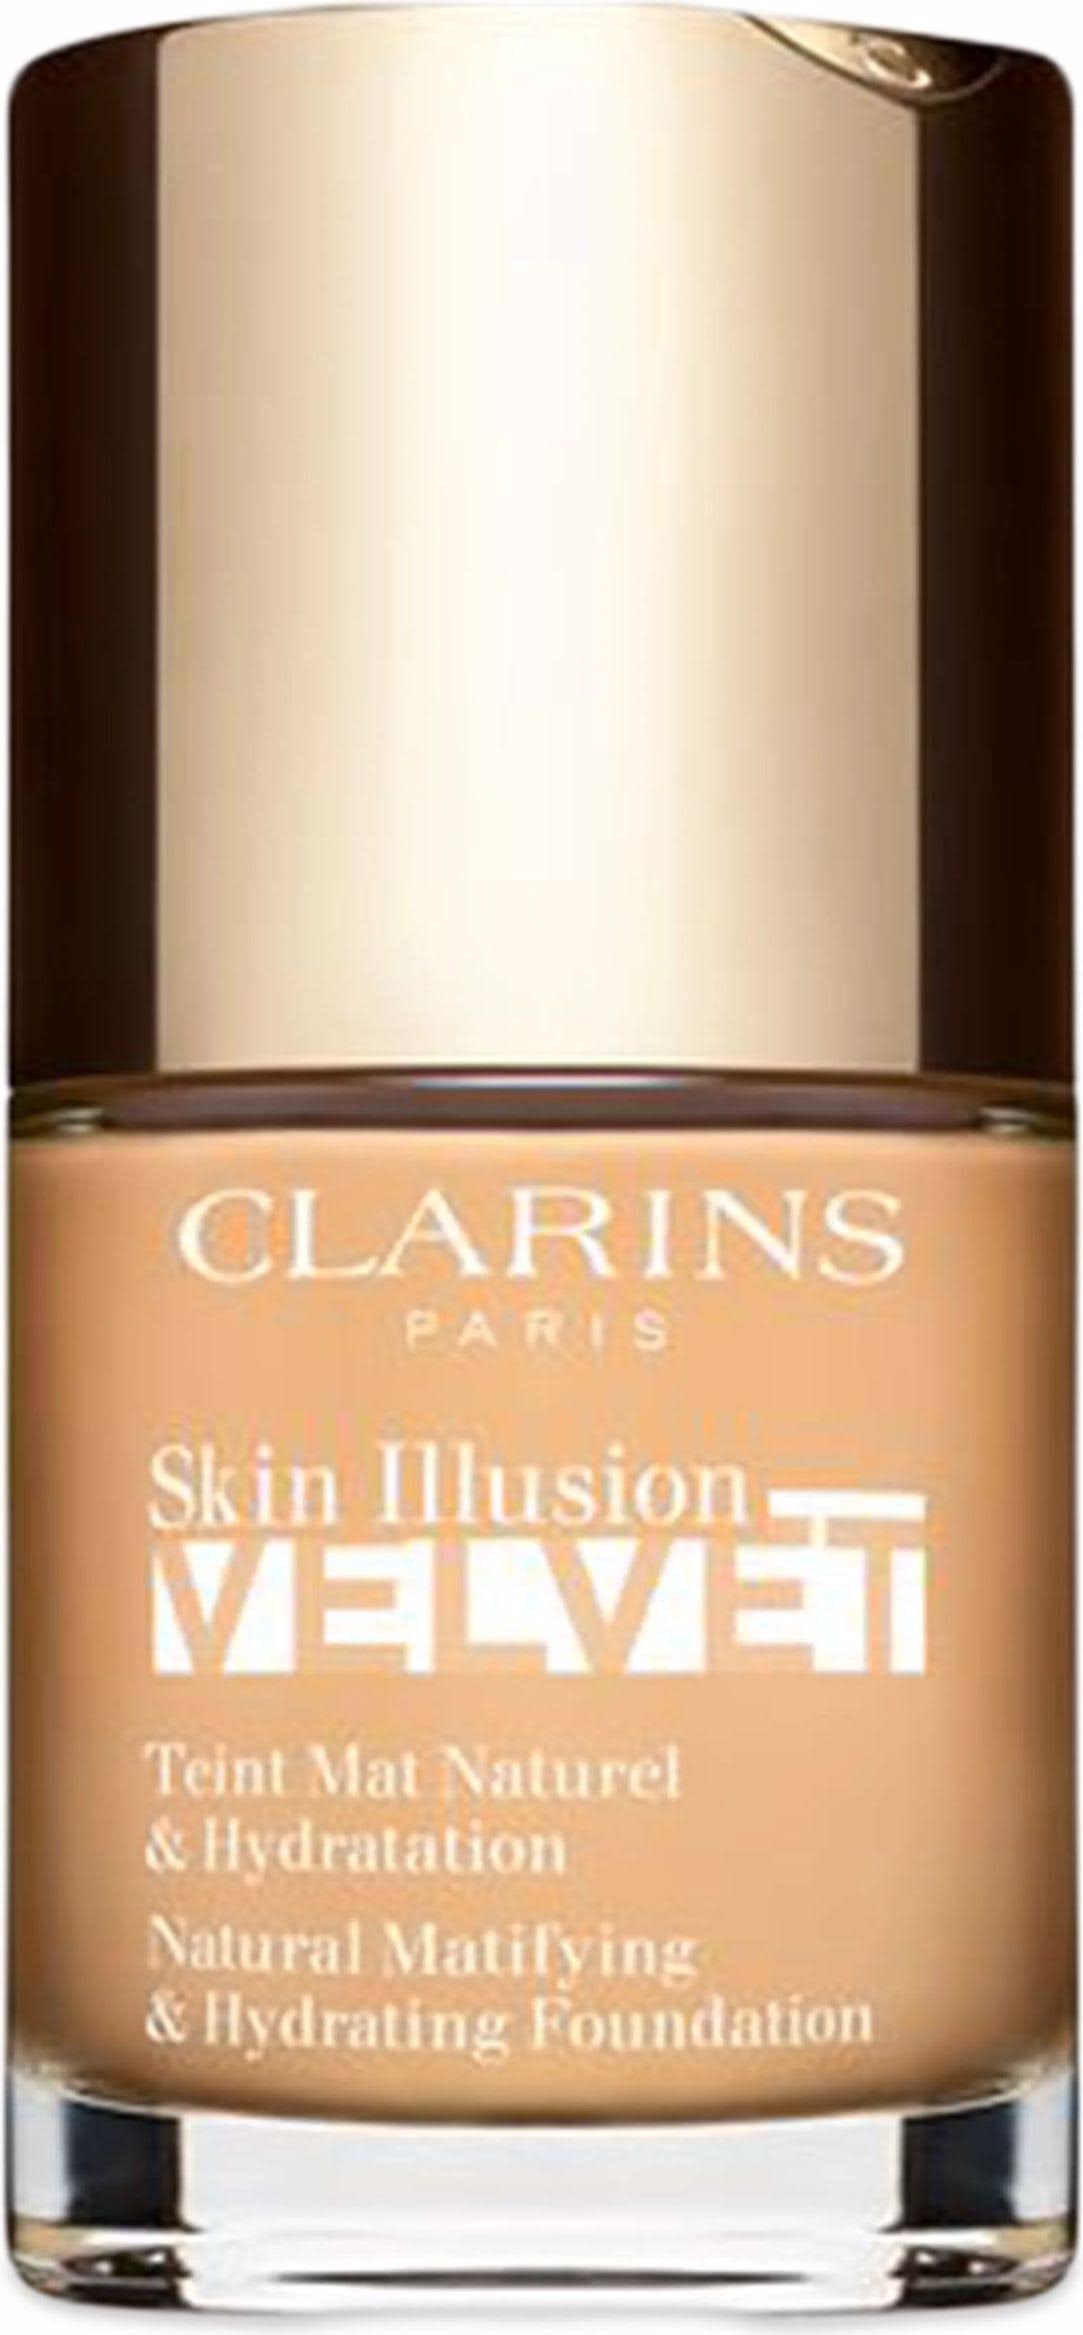 CLARINS - Skin Illusion Velvet 30 ml - 105N